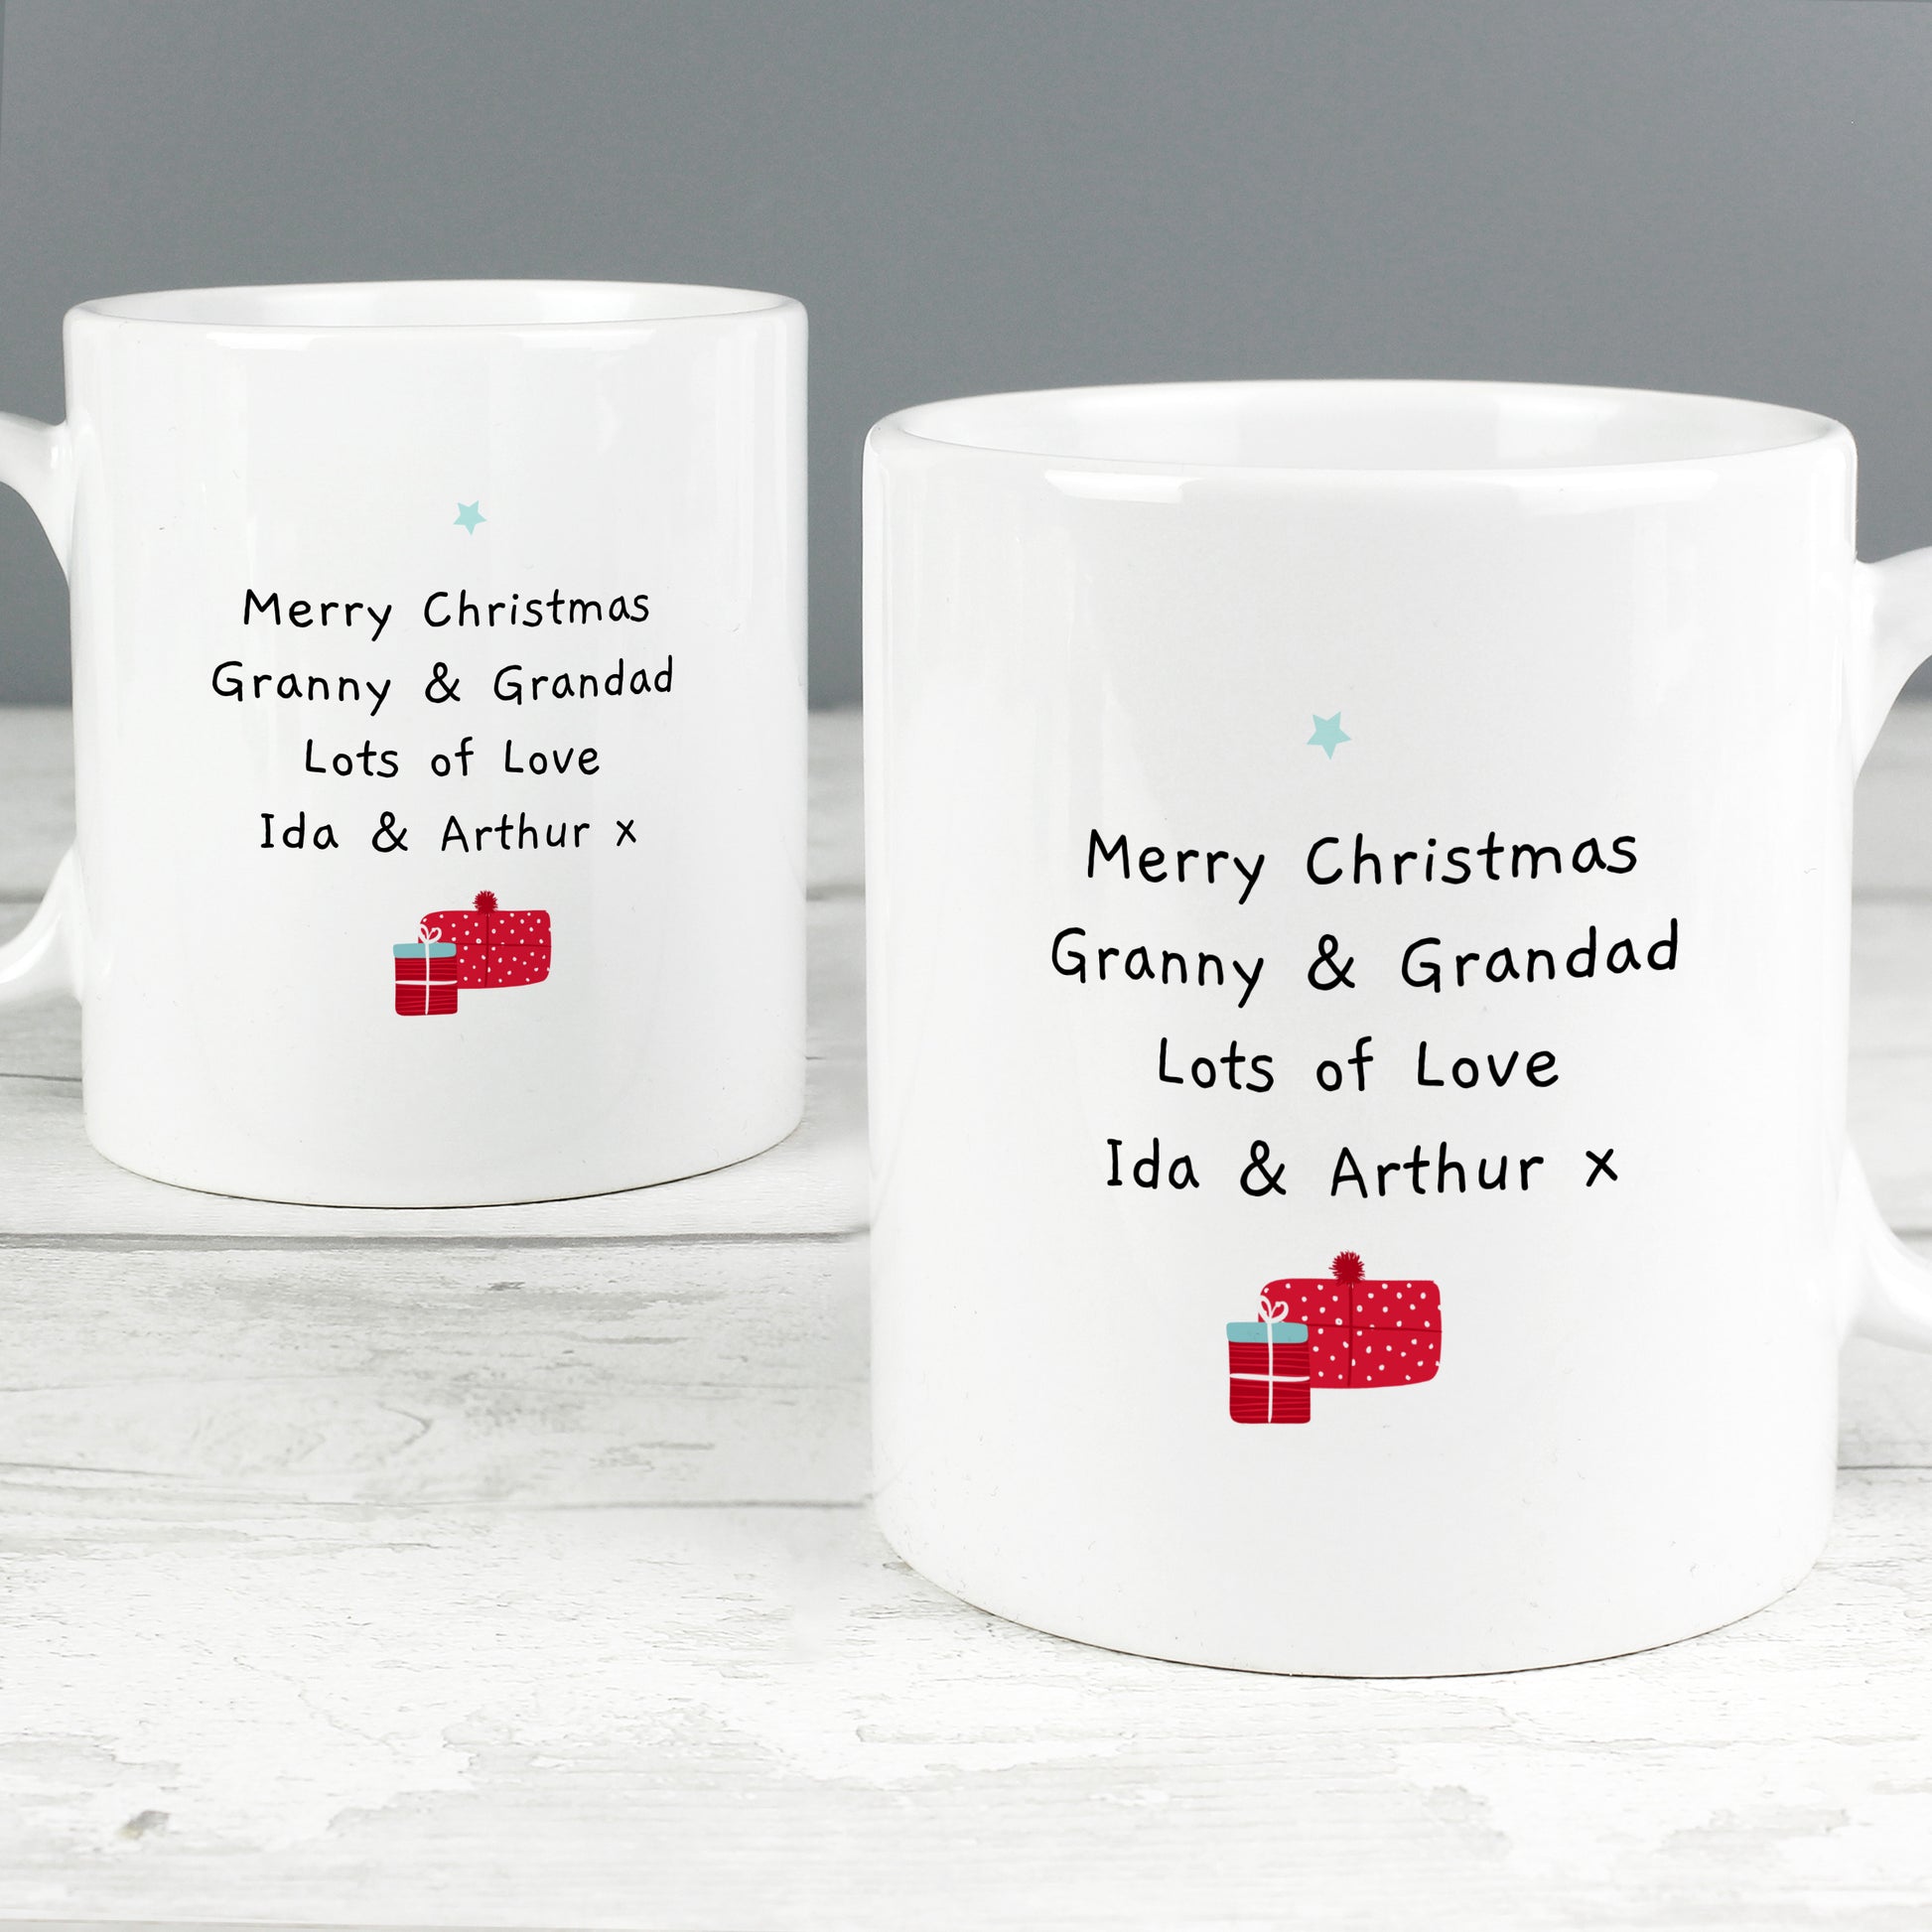 Personalised Mr & Mrs Claus Christmas Mug Set